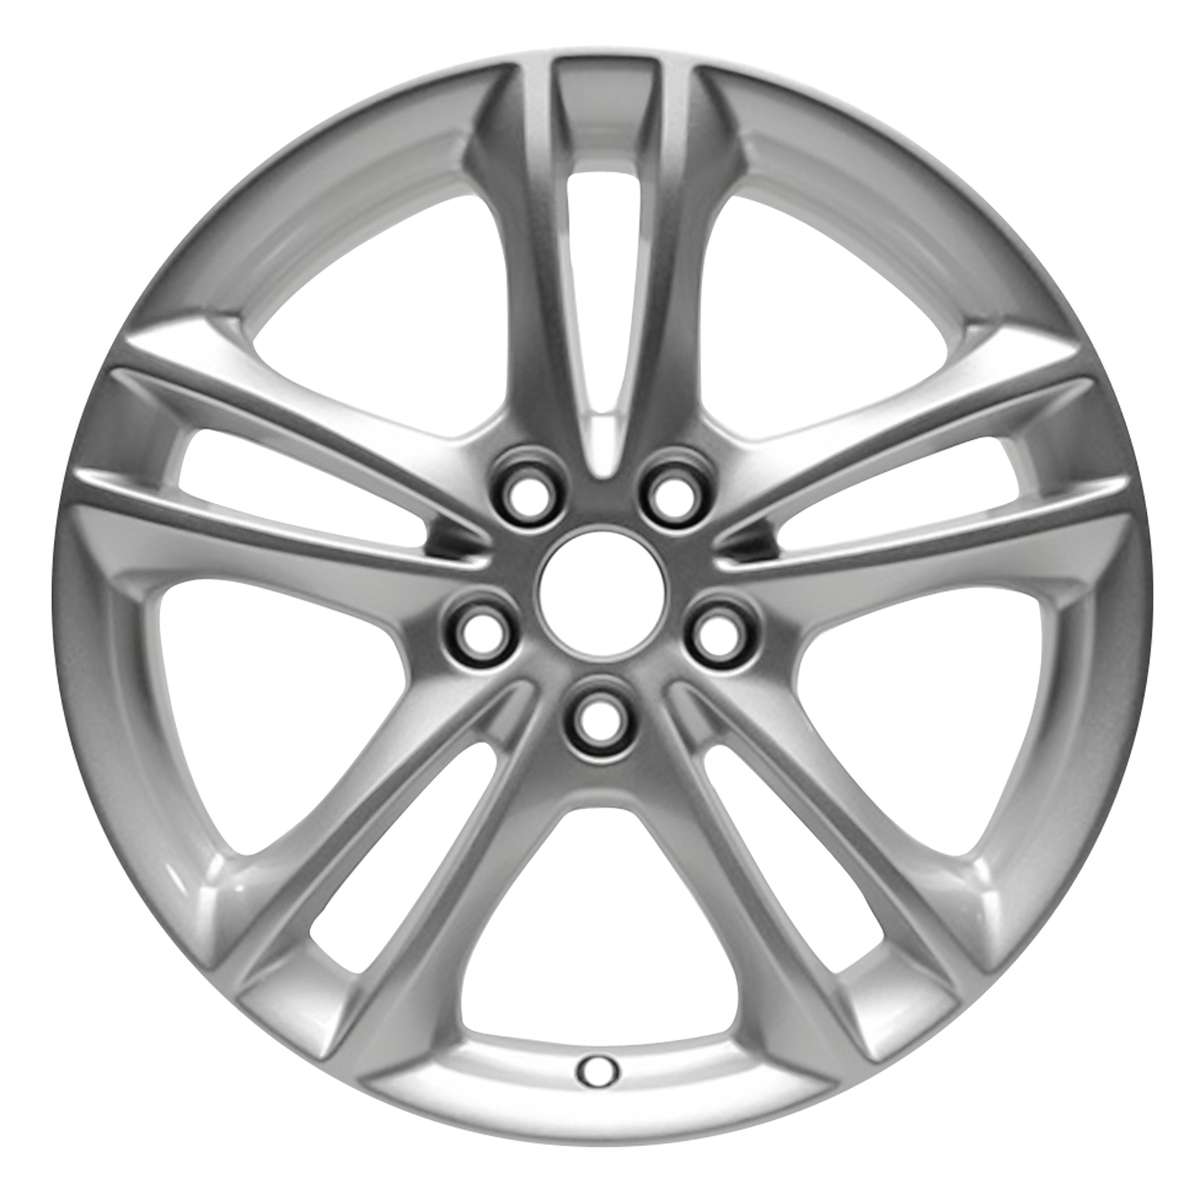 2017 Ford Fusion 17" OEM Wheel Rim W3984SB